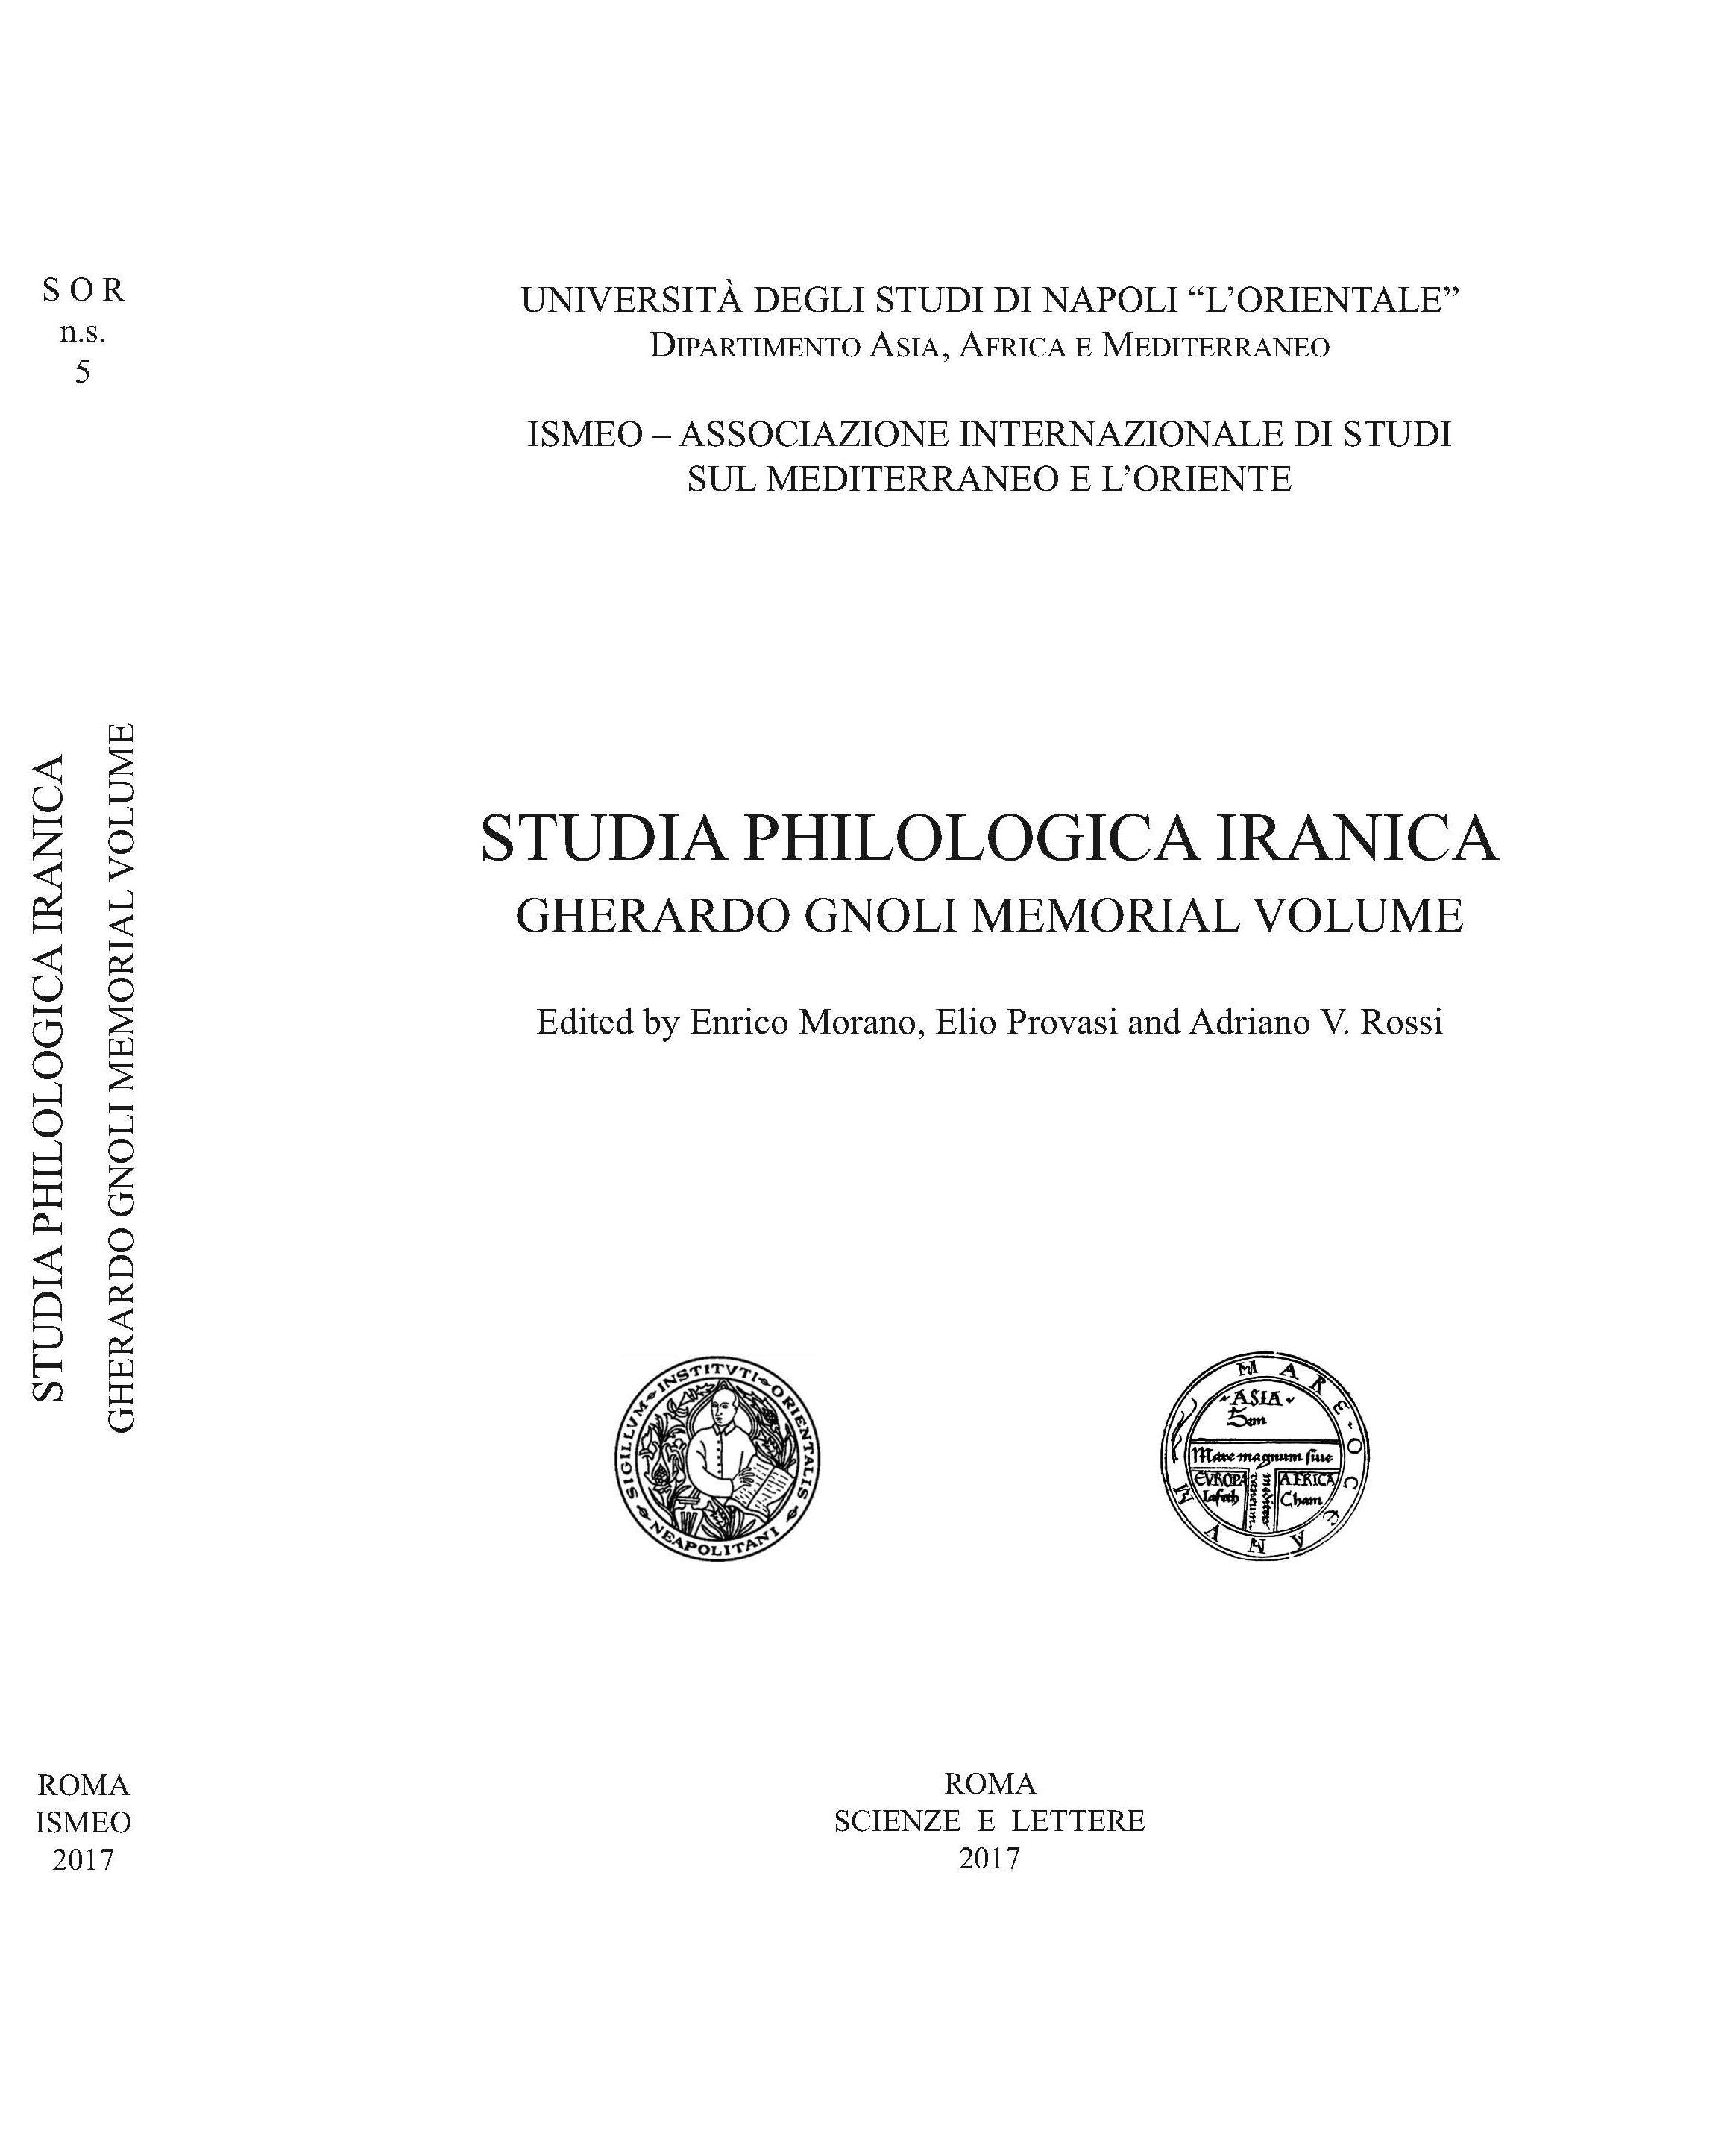 STUDIA PHILOLOGICA IRANICA
GHERARDO GNOLI MEMORIAL VOLUME - Serie Orientale Roma N.S. n. 5 
